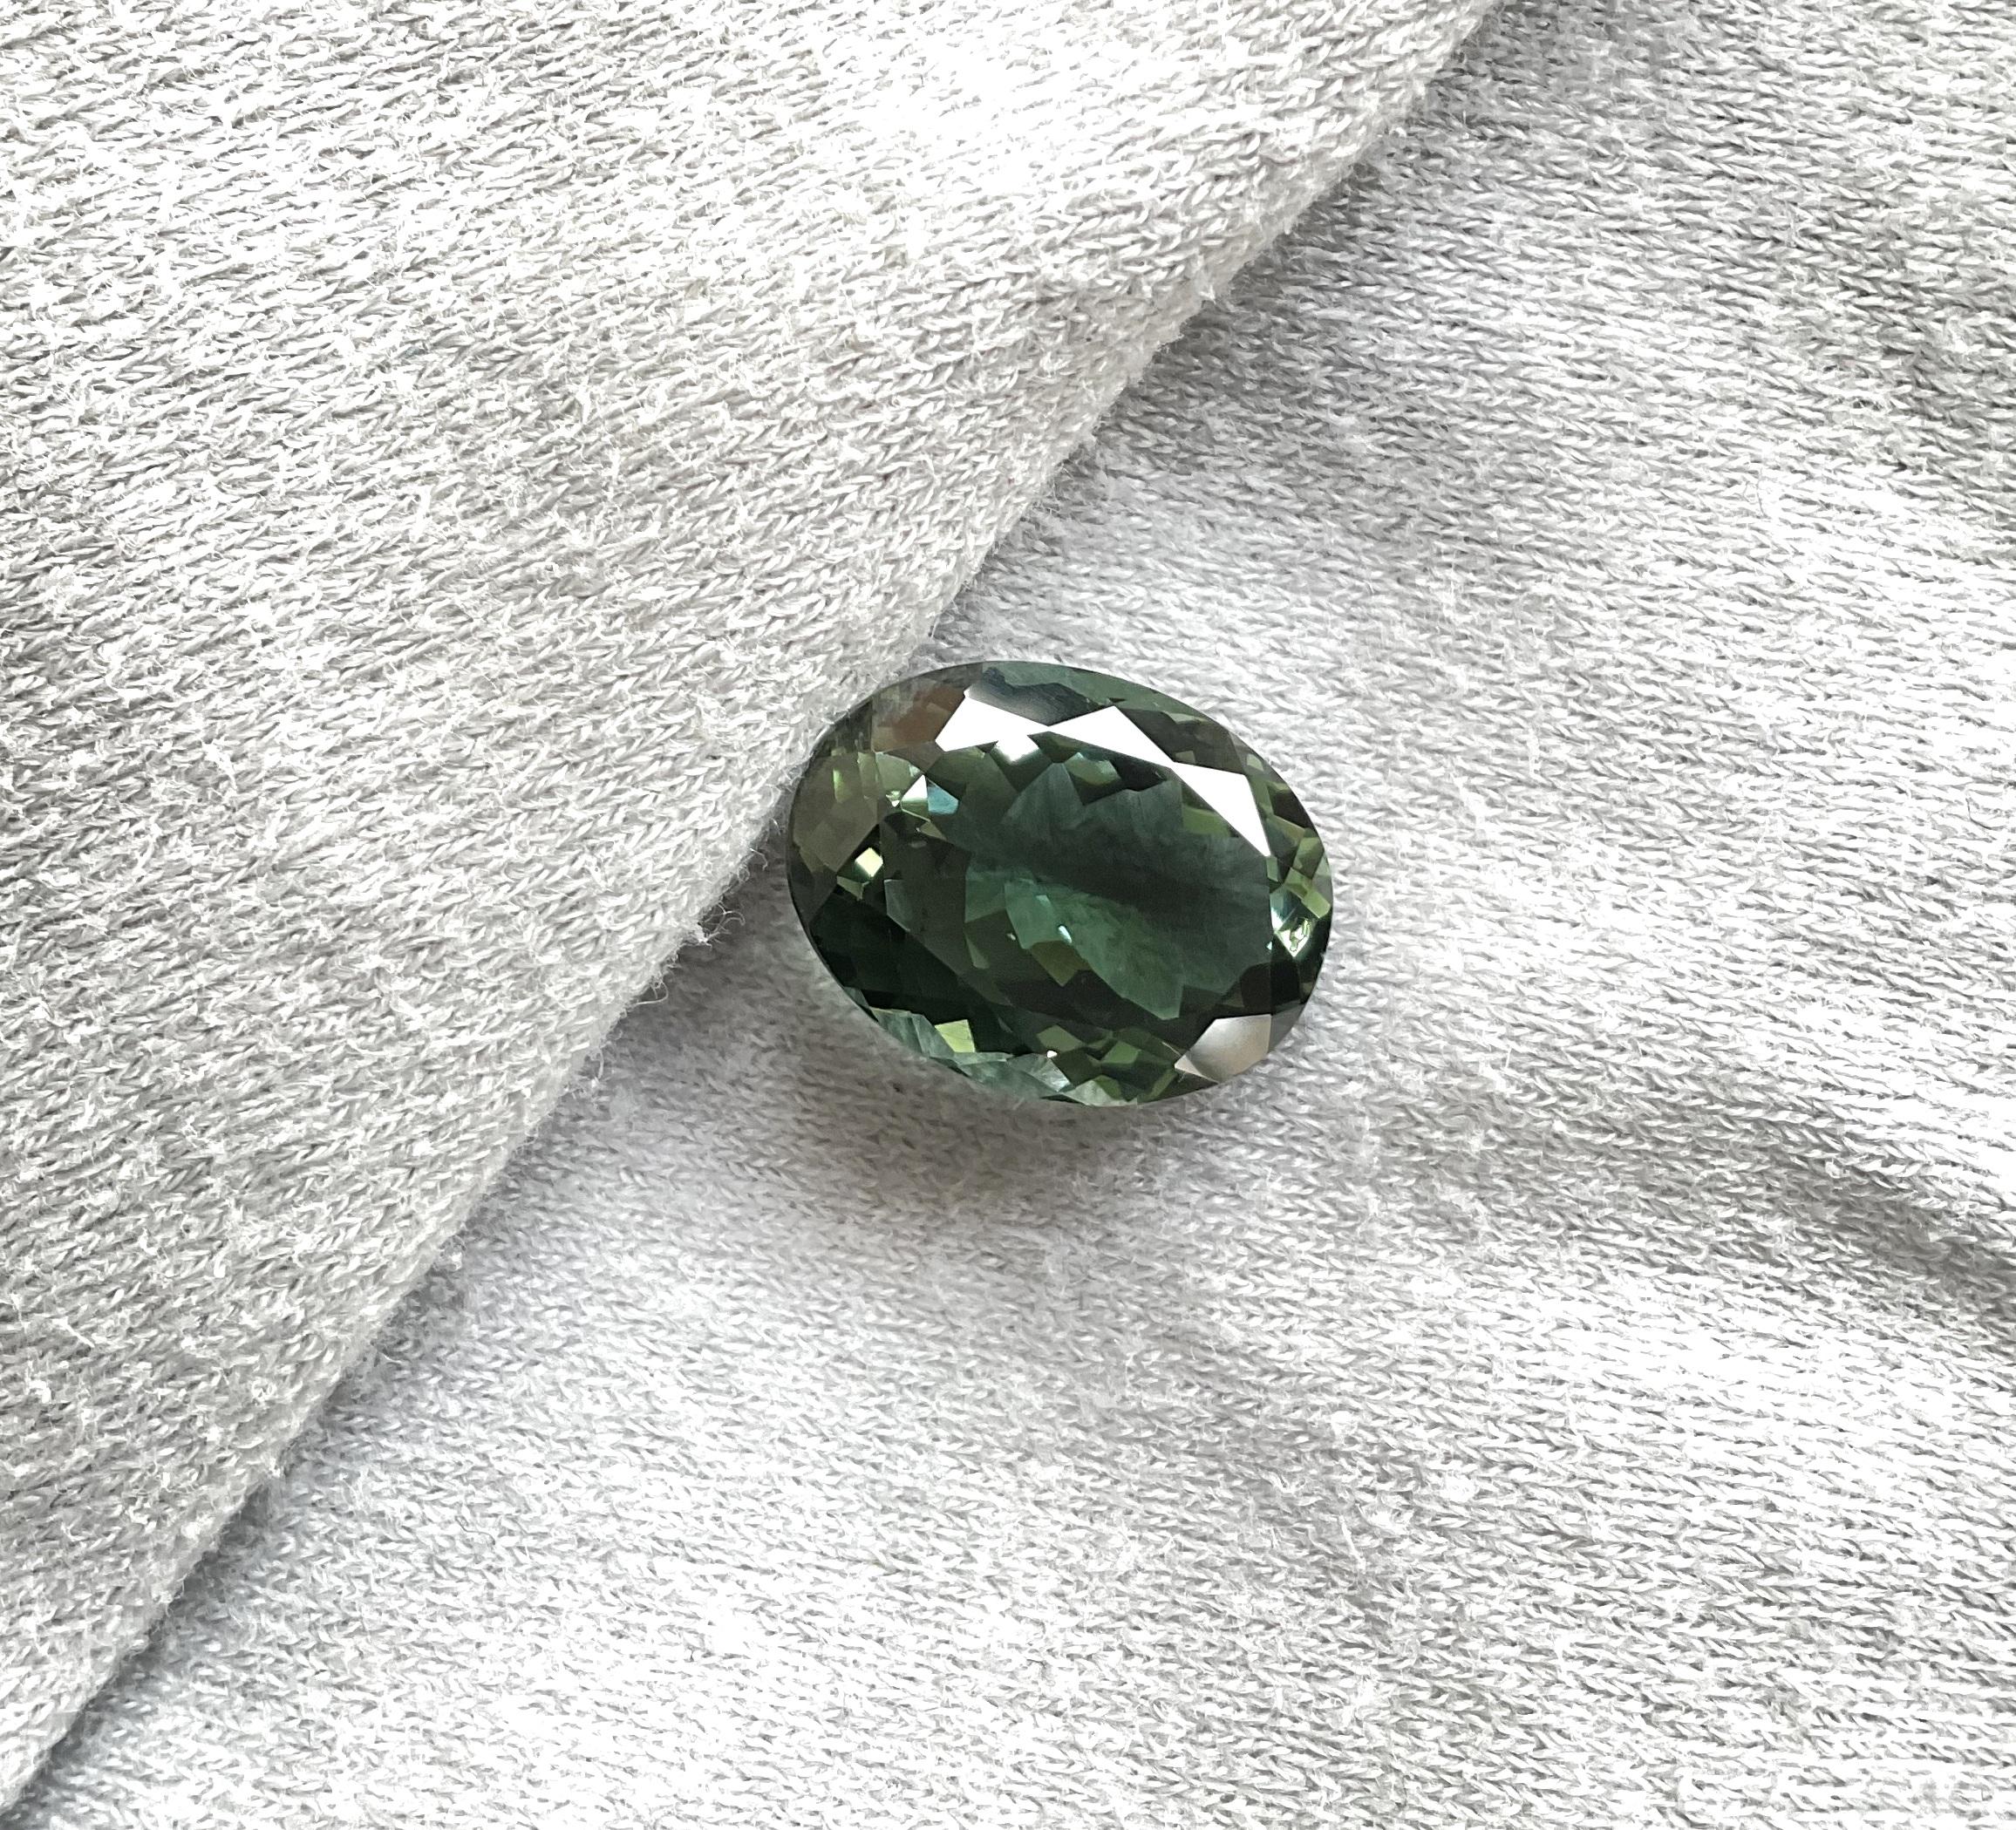 Gemstone - Tourmaline
Weight- 8.76 Carats
Shape - Oval
Size - 15.5x12x15.5 MM
Pieces - 1